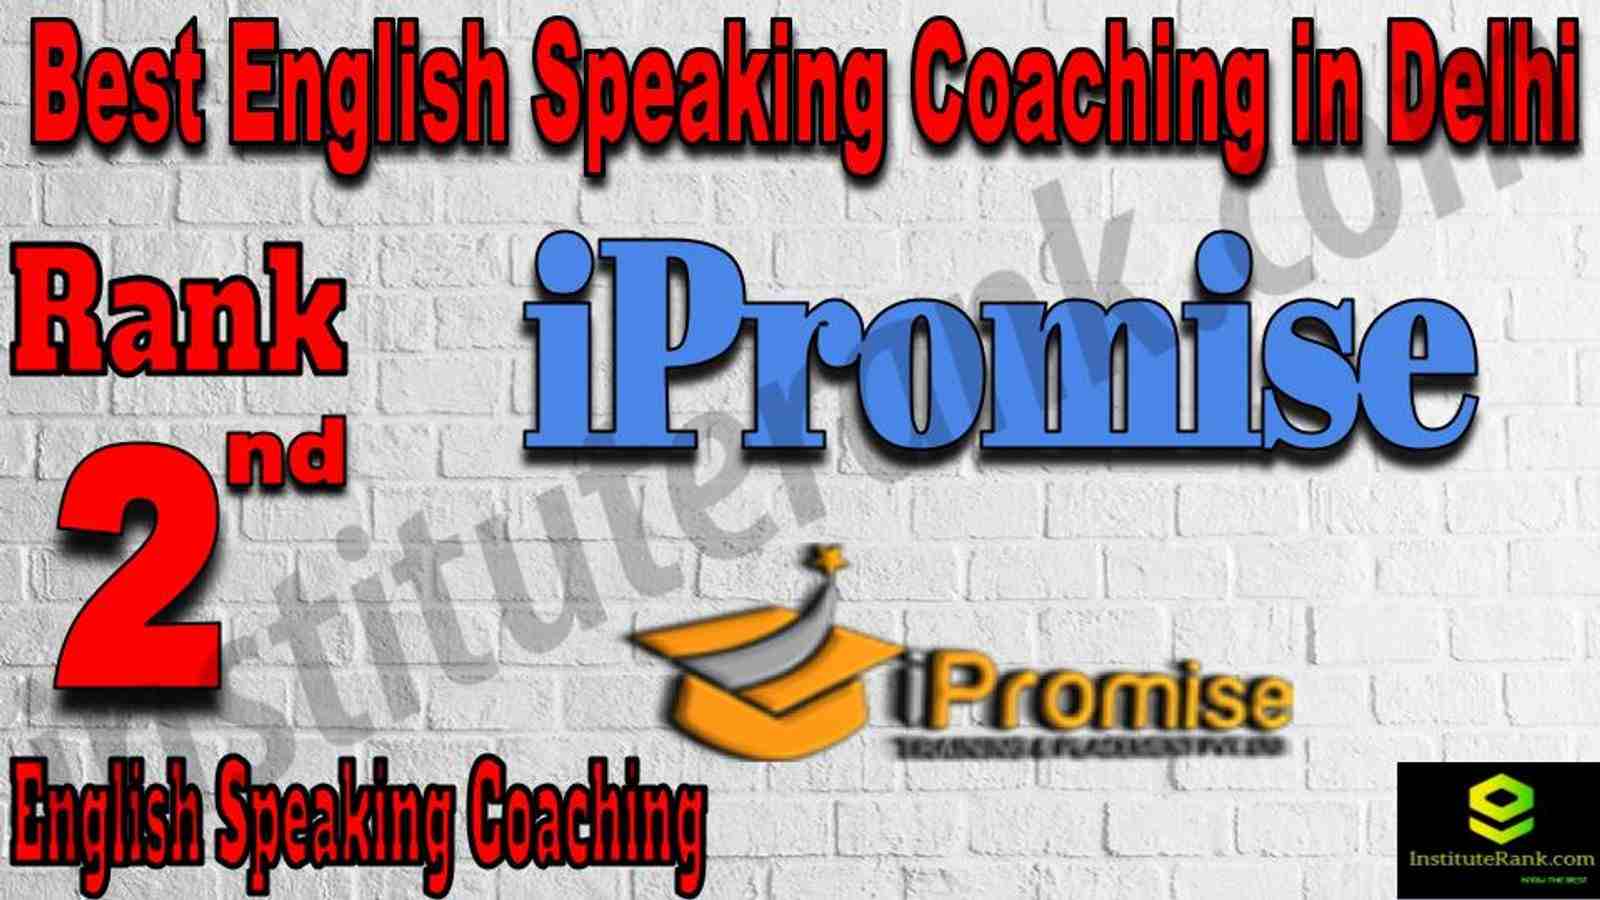 Rank 2 Best English Speaking Coaching in Delhi